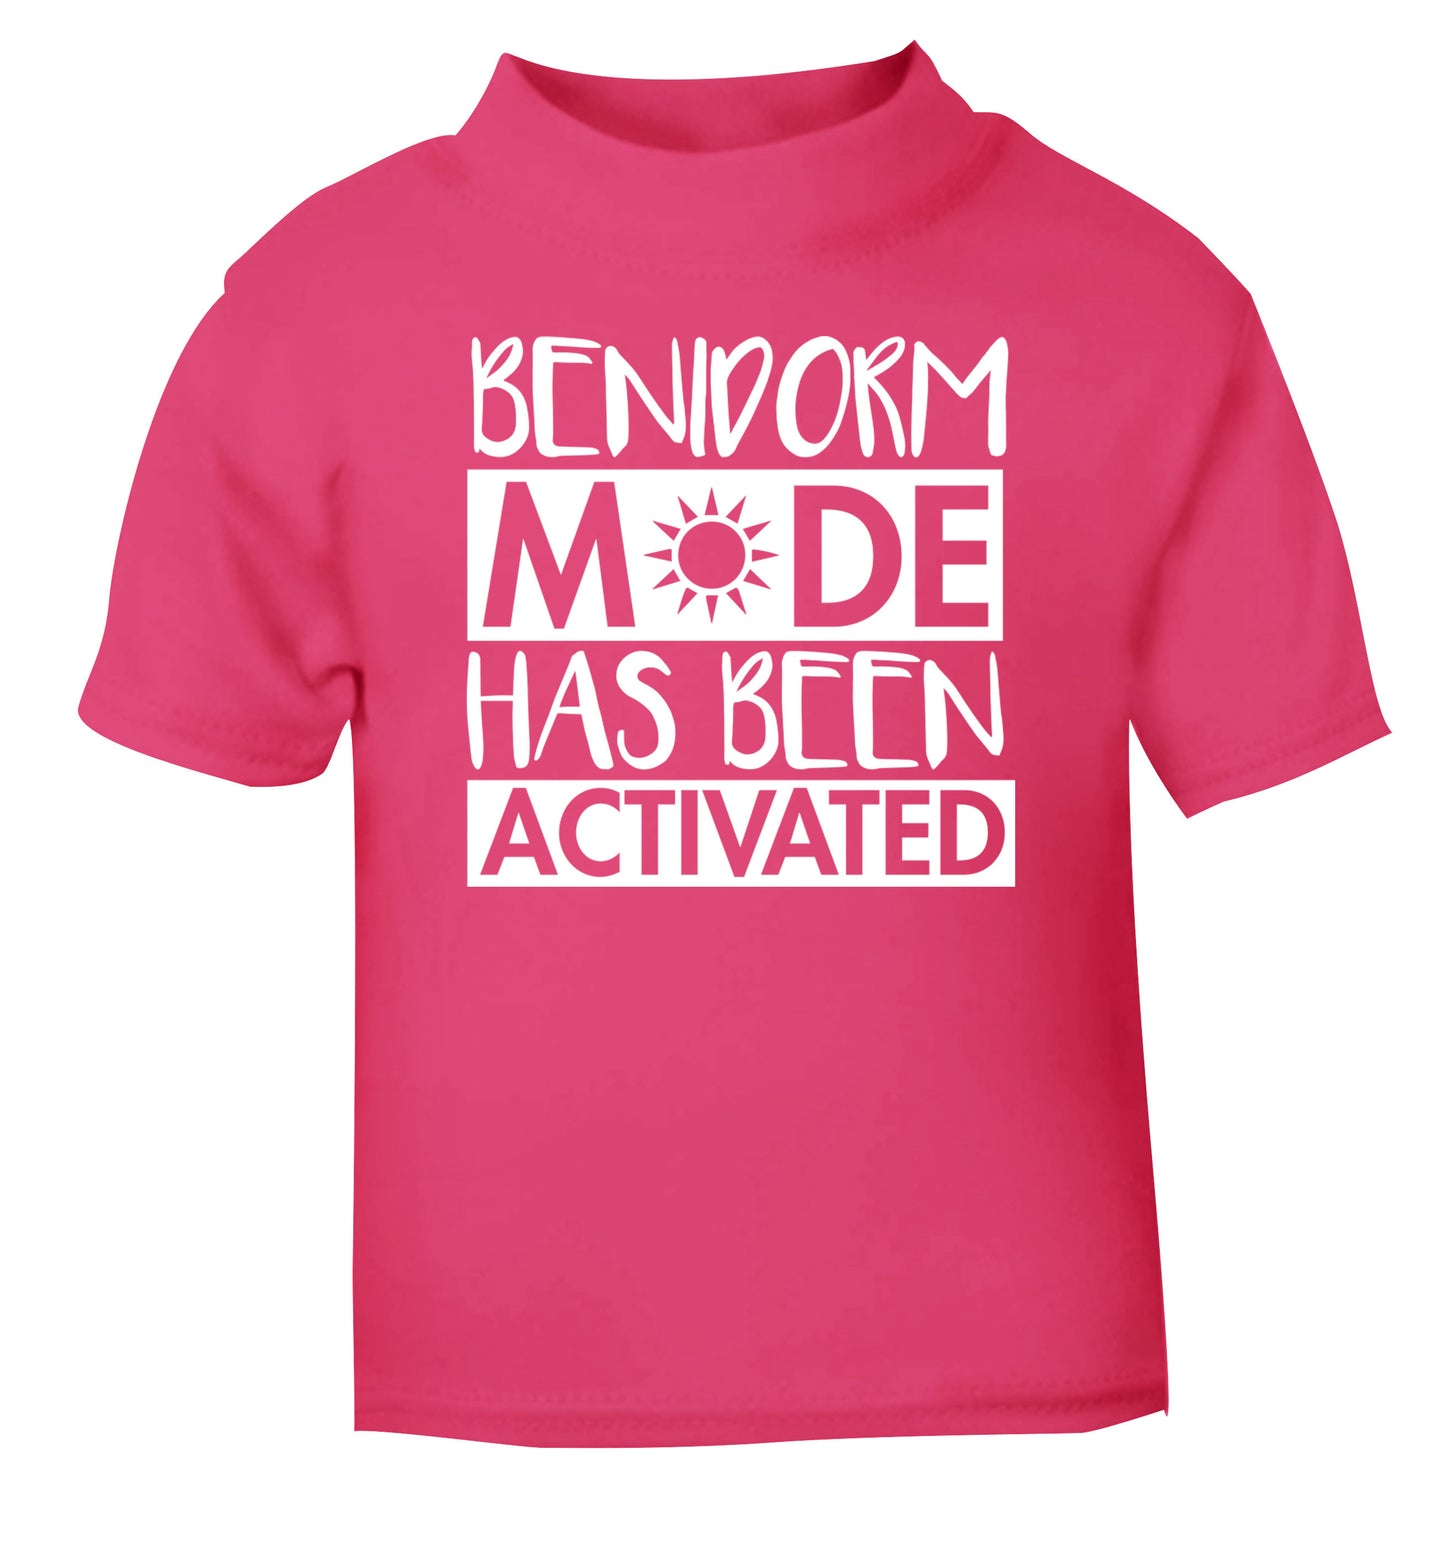 Benidorm mode has been activated pink Baby Toddler Tshirt 2 Years